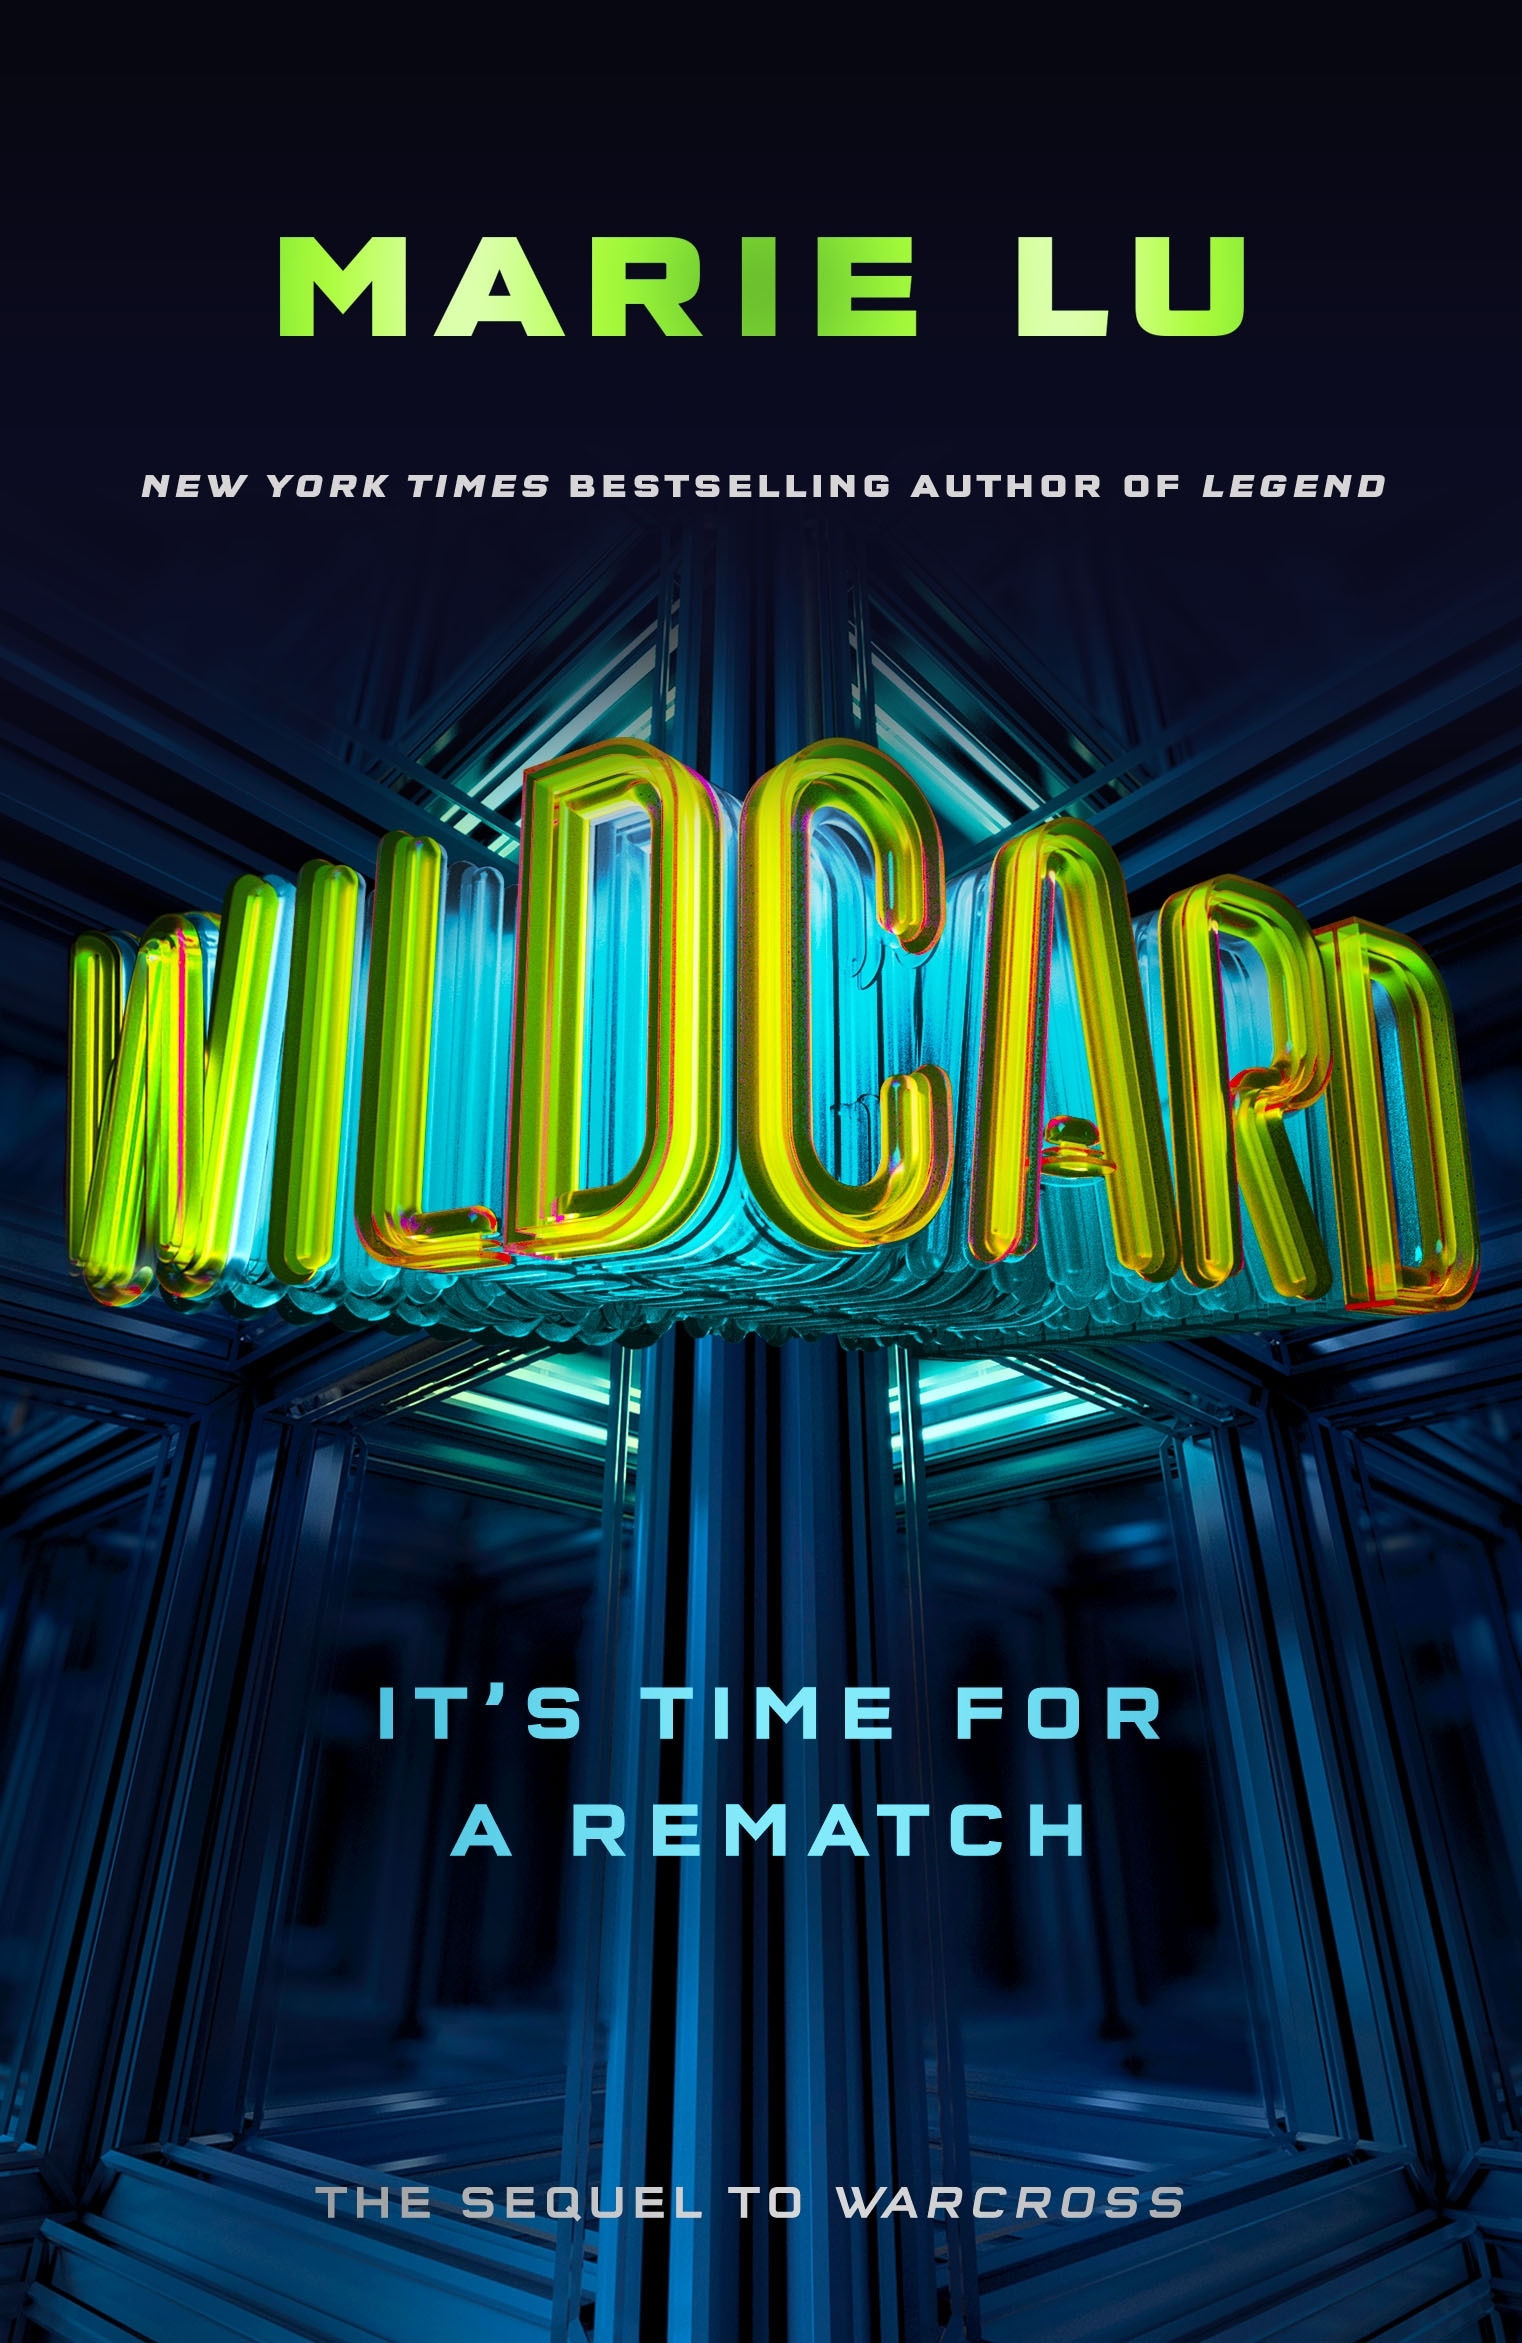 Book “Wildcard (Warcross 2)” by Marie Lu — September 19, 2019